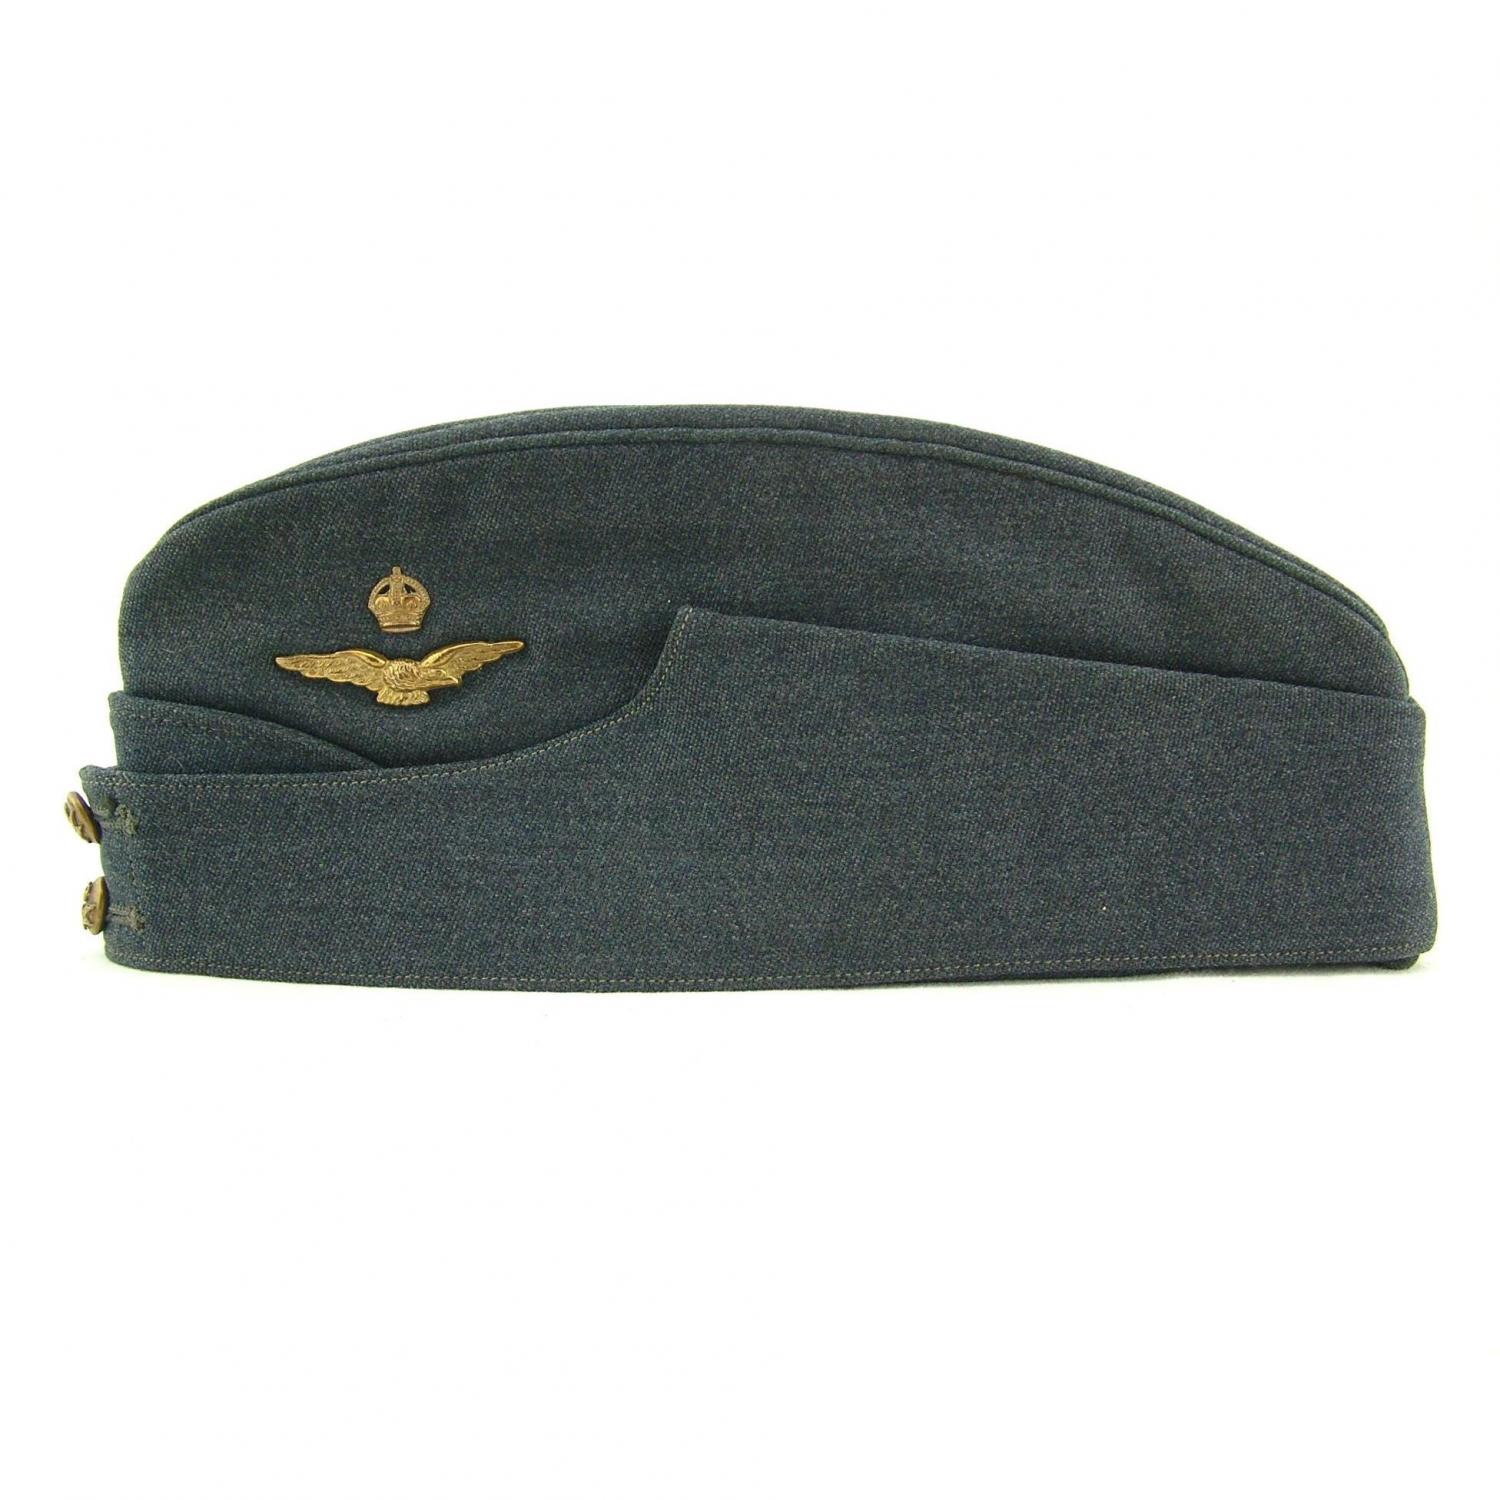 RAF officer rank field service cap